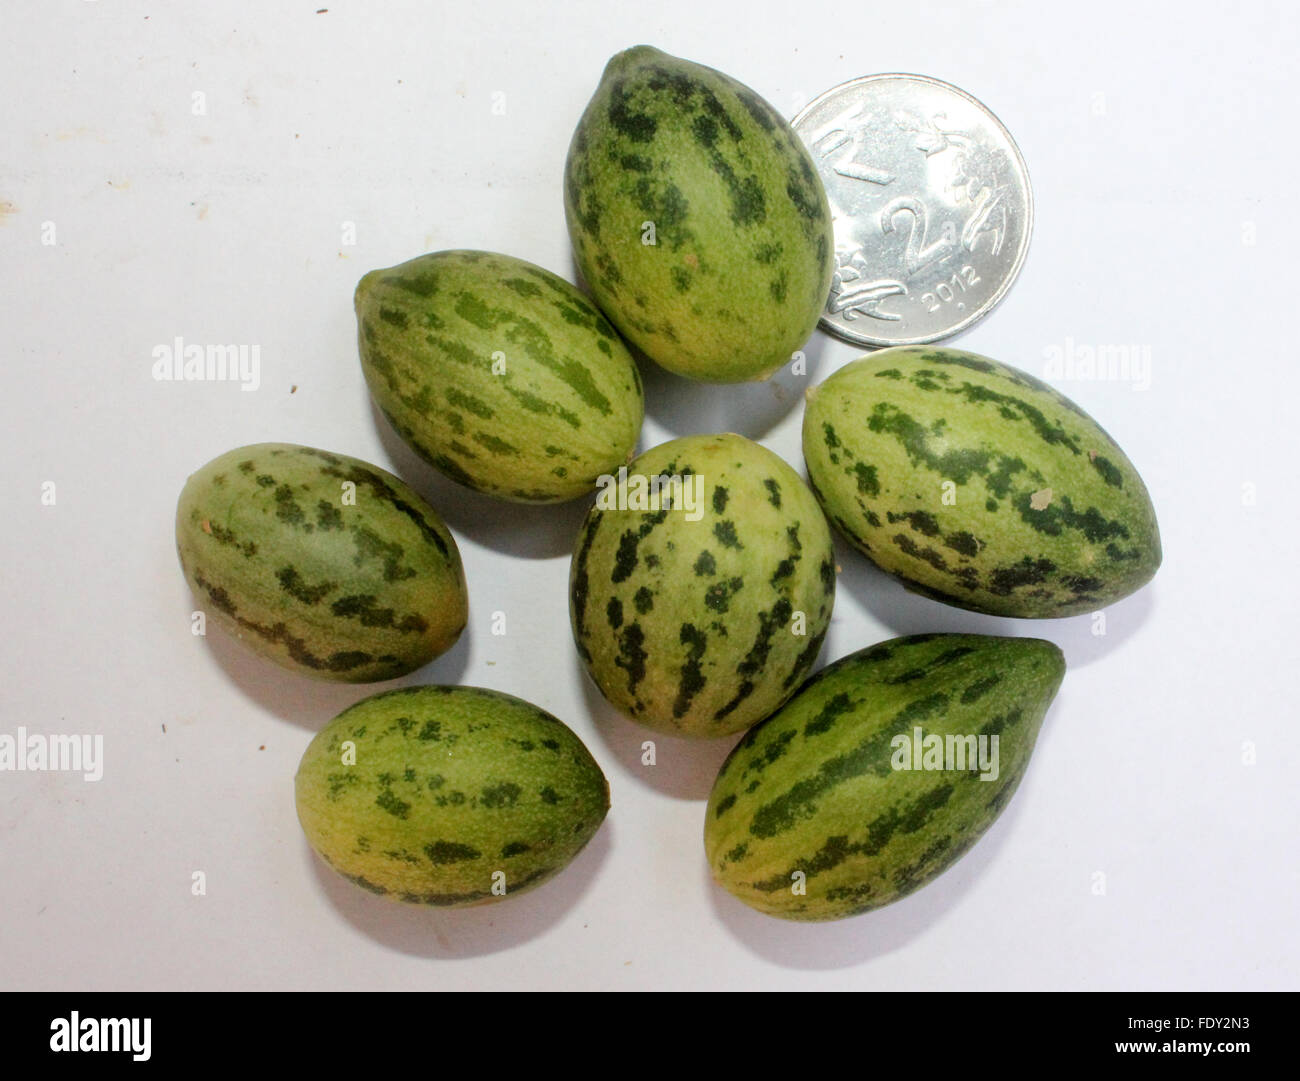 Wild melon, Cucumis melo var agrestis, fruit section chhoti kachri, oval fruit, green skin, dark green patches, pale green flesh Stock Photo